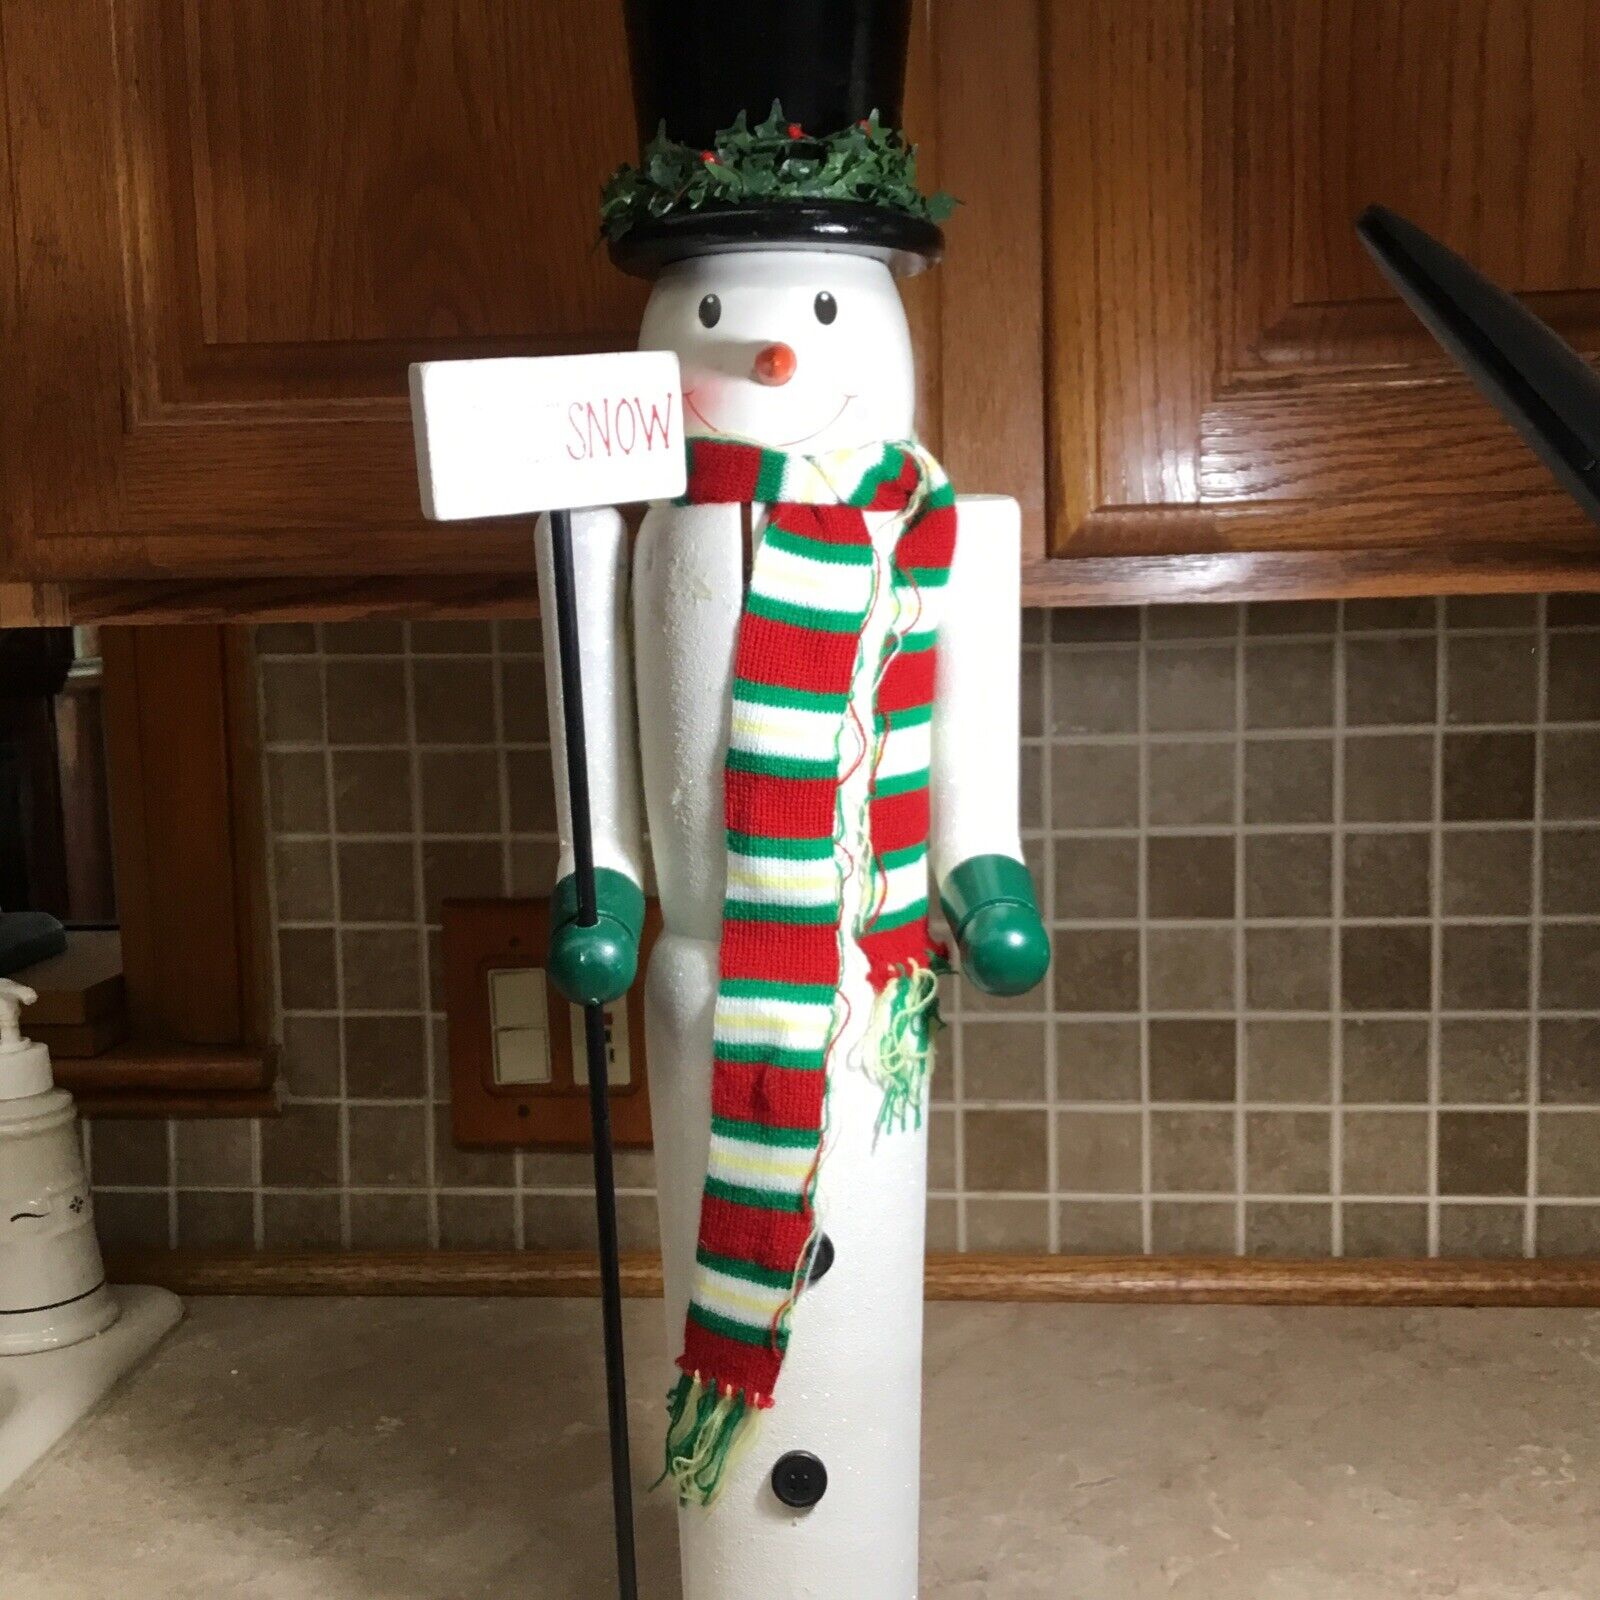 24”—2feet Tall Wooden Snowman Nutcracker, Let It Snow